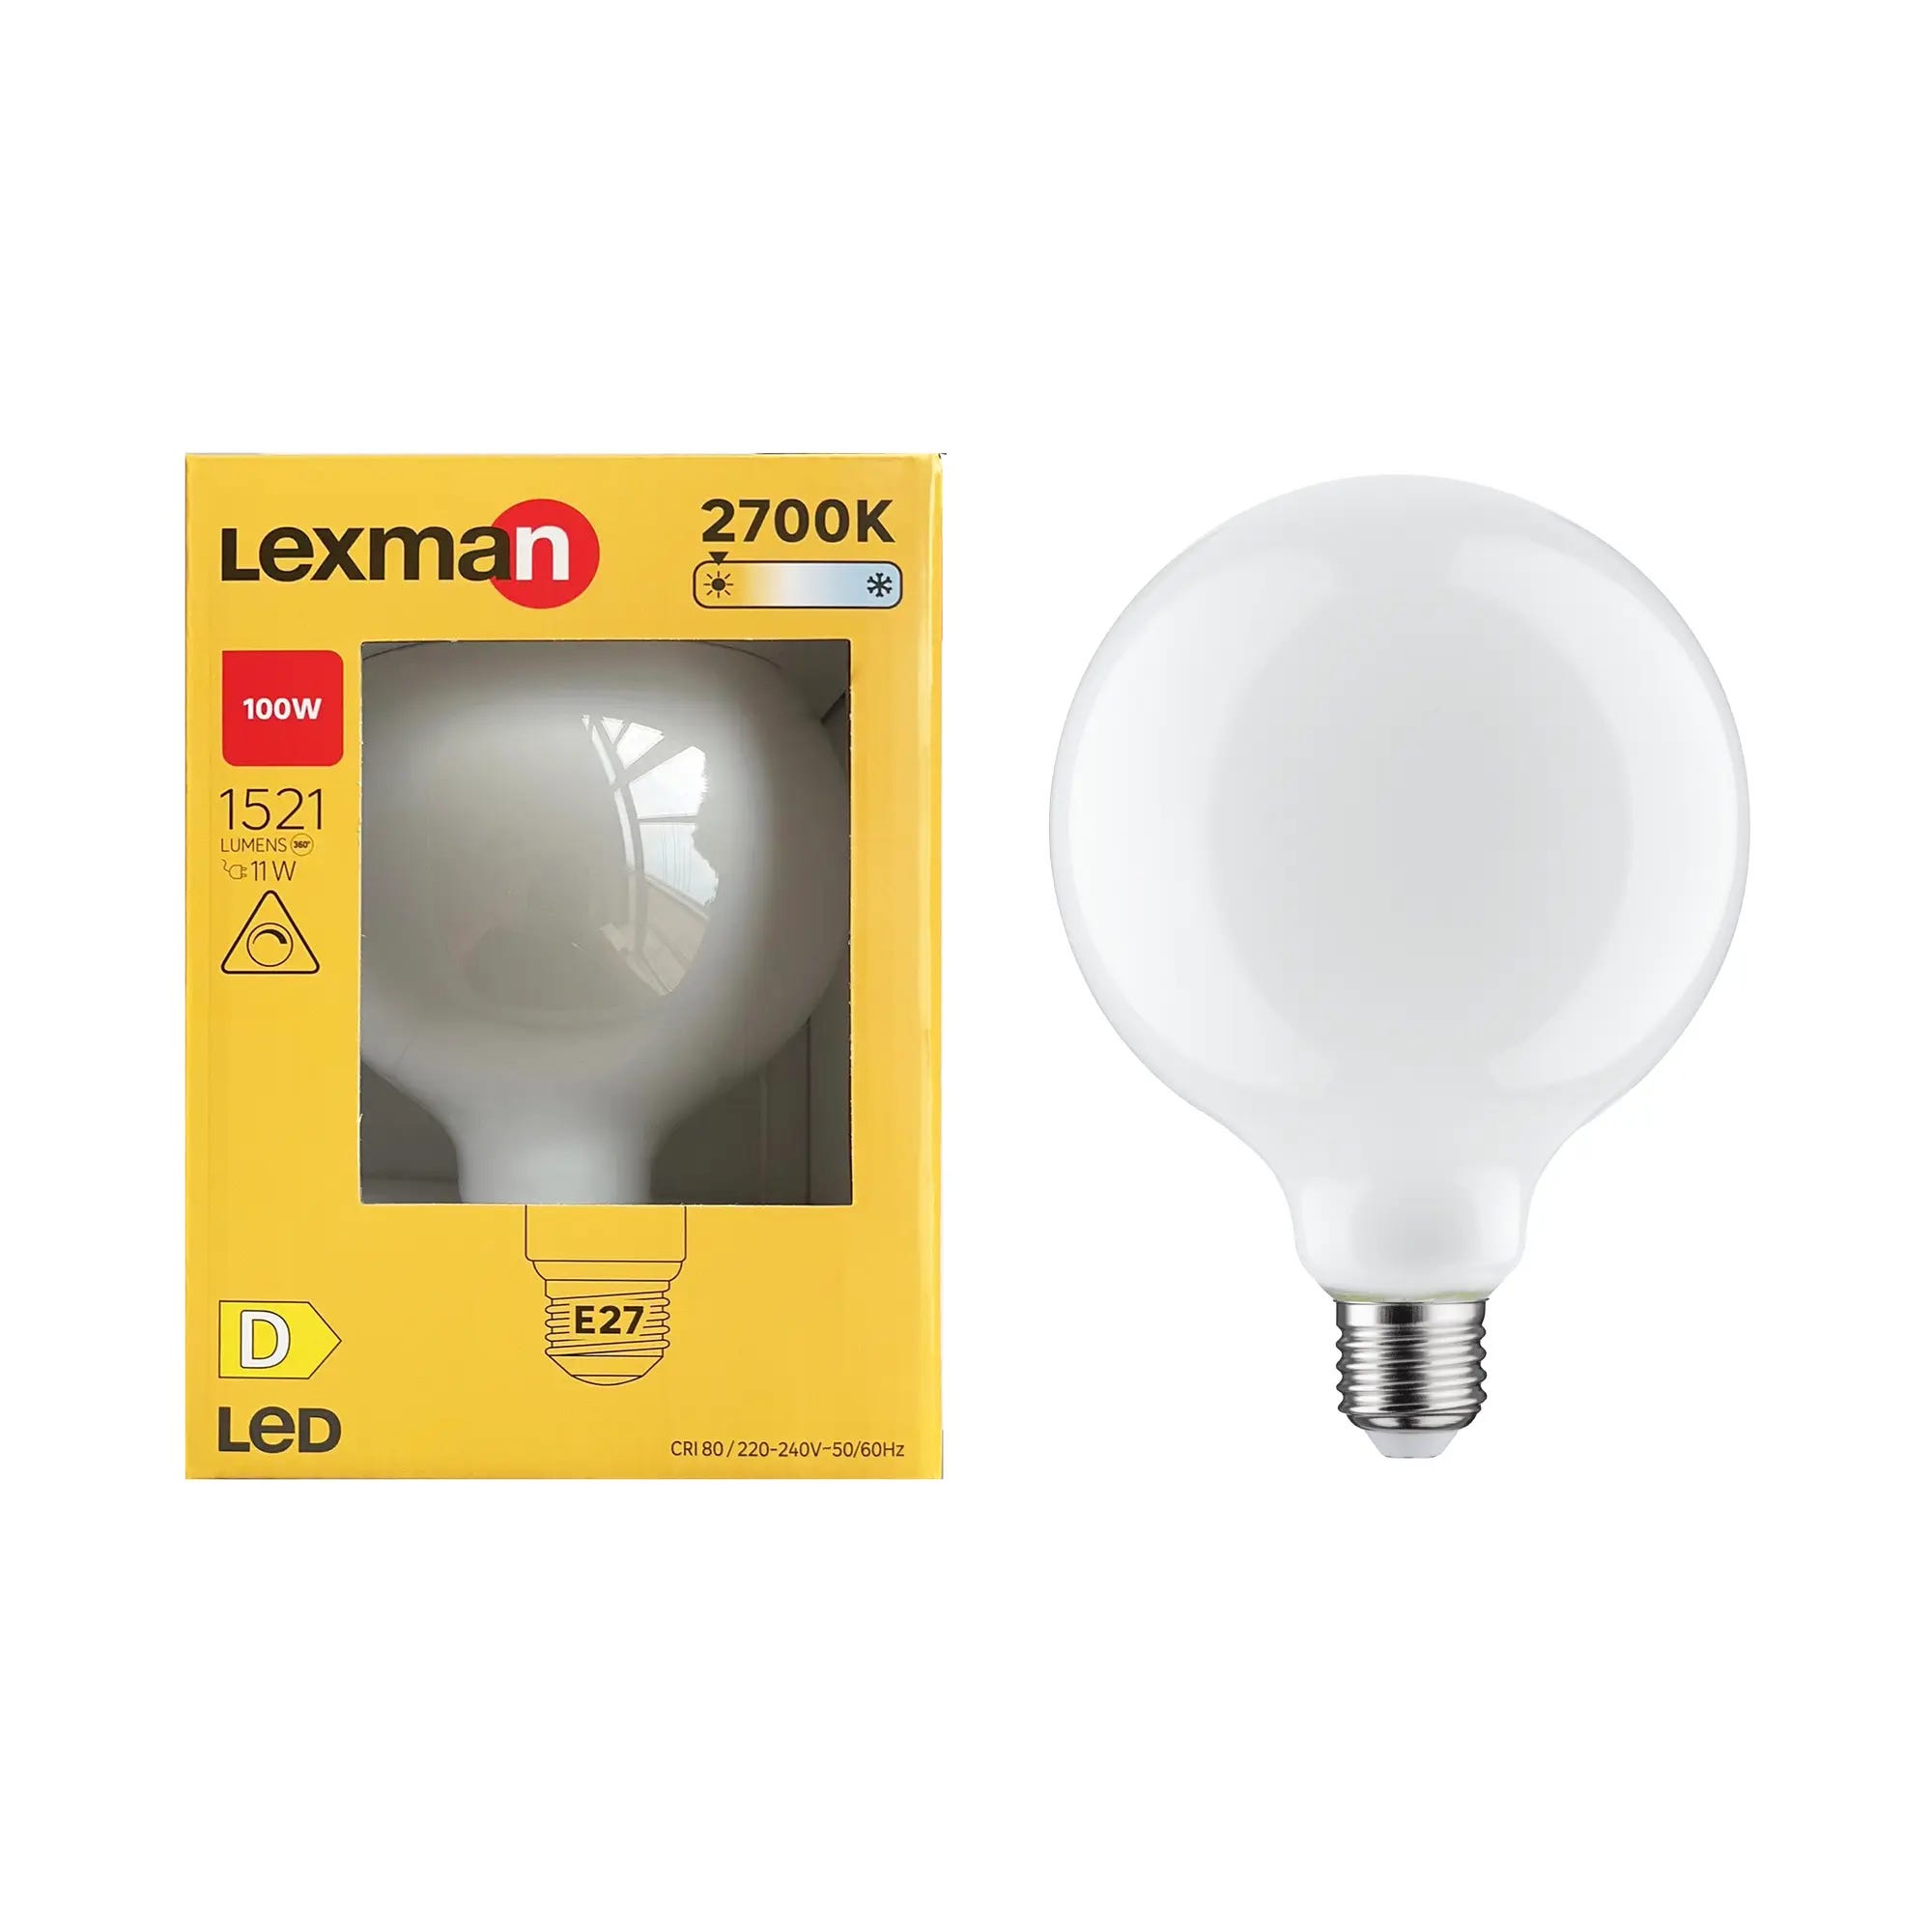 Lampadina LED, globo, opaco, luce calda, 11W=1521LM (equiv 100 W